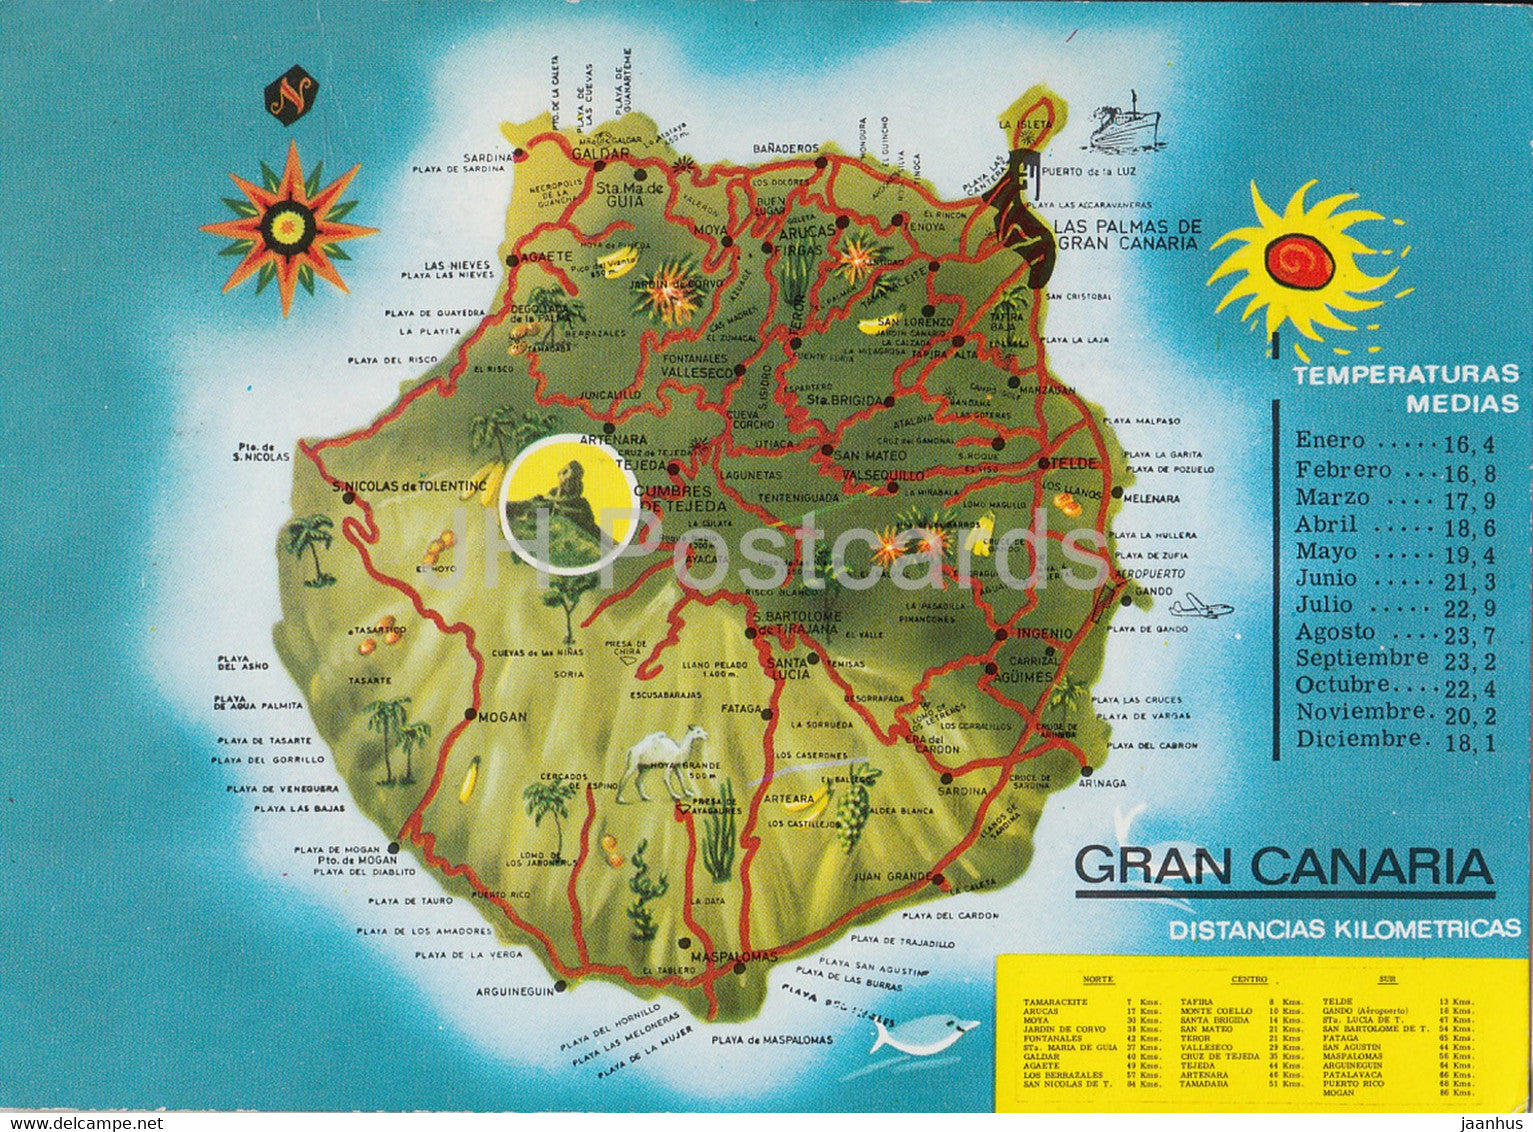 Gran Canaria - Llamada tambien El Continente en Miniatura - Also called The Little Continent - map - 1979 - Spain - used - JH Postcards